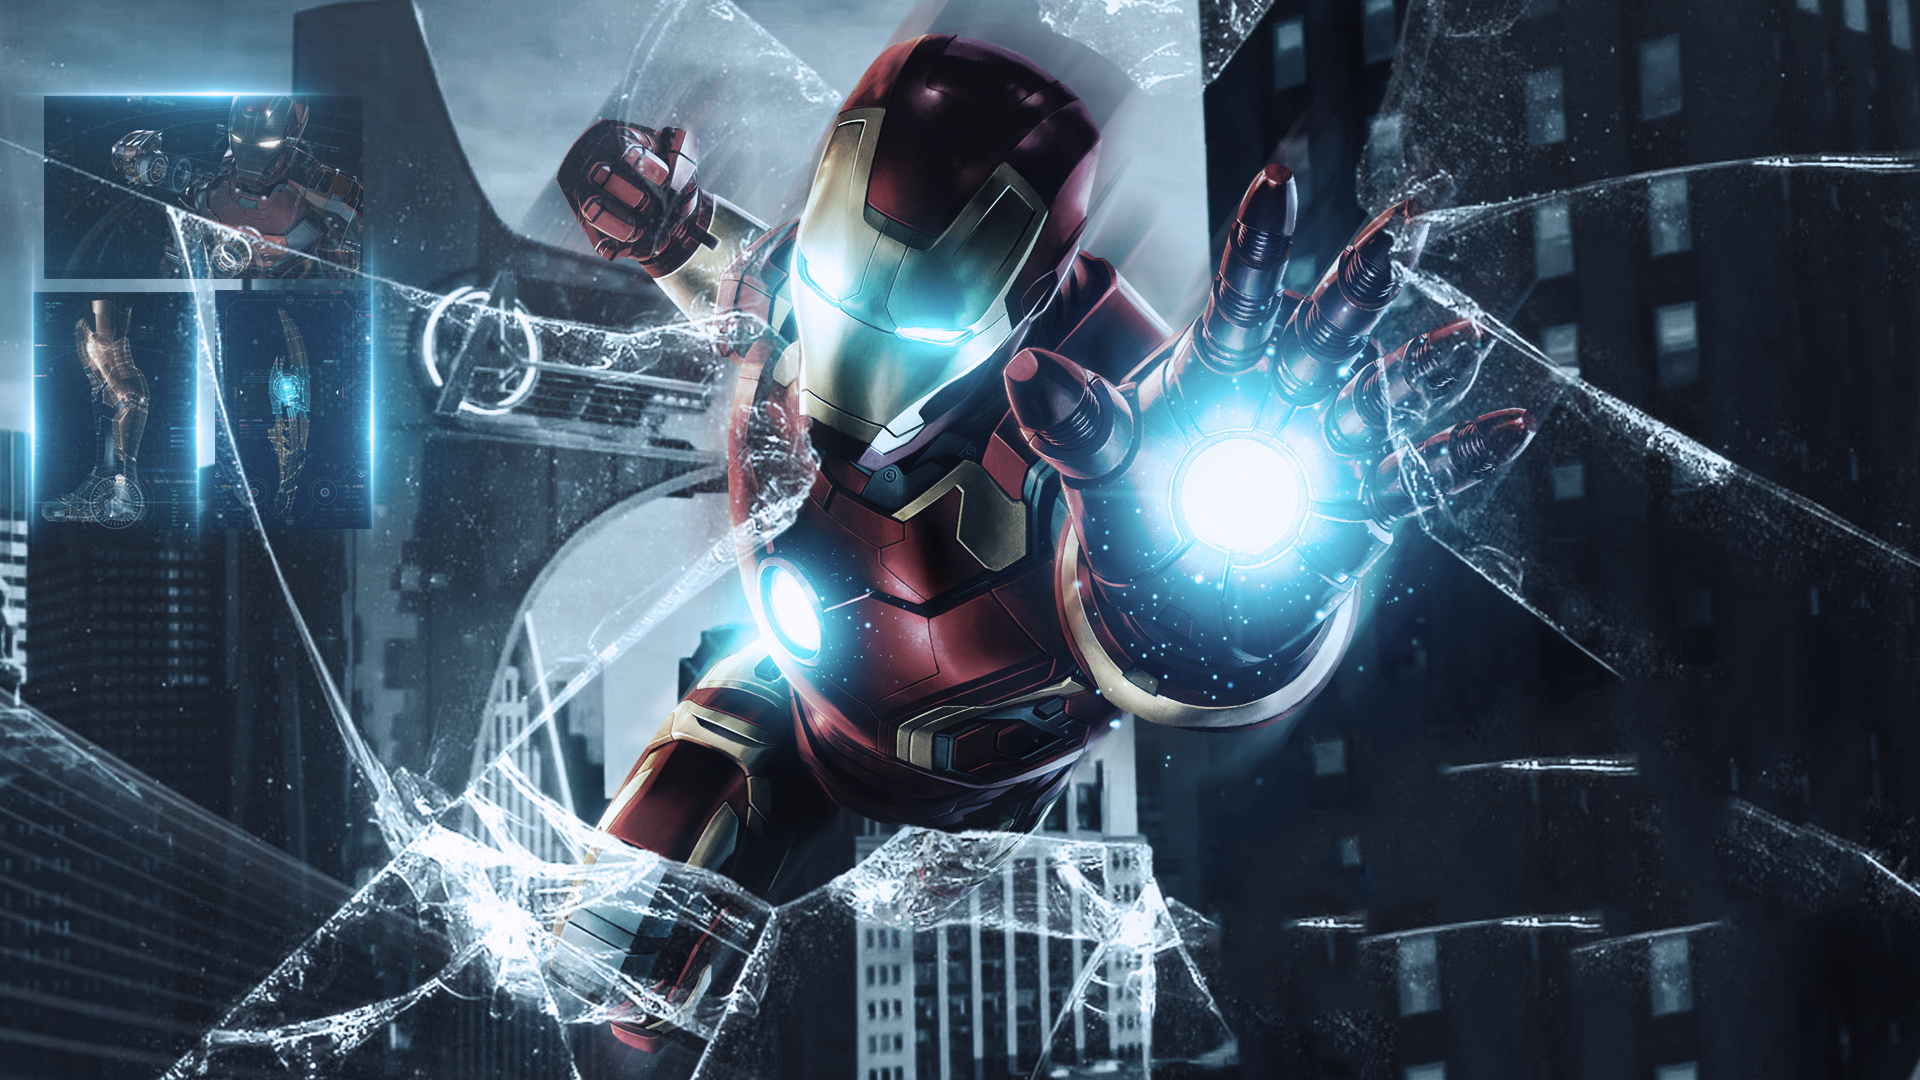  Iron  Man  Avengers Endgame  Poster HD  Superheroes 4k 